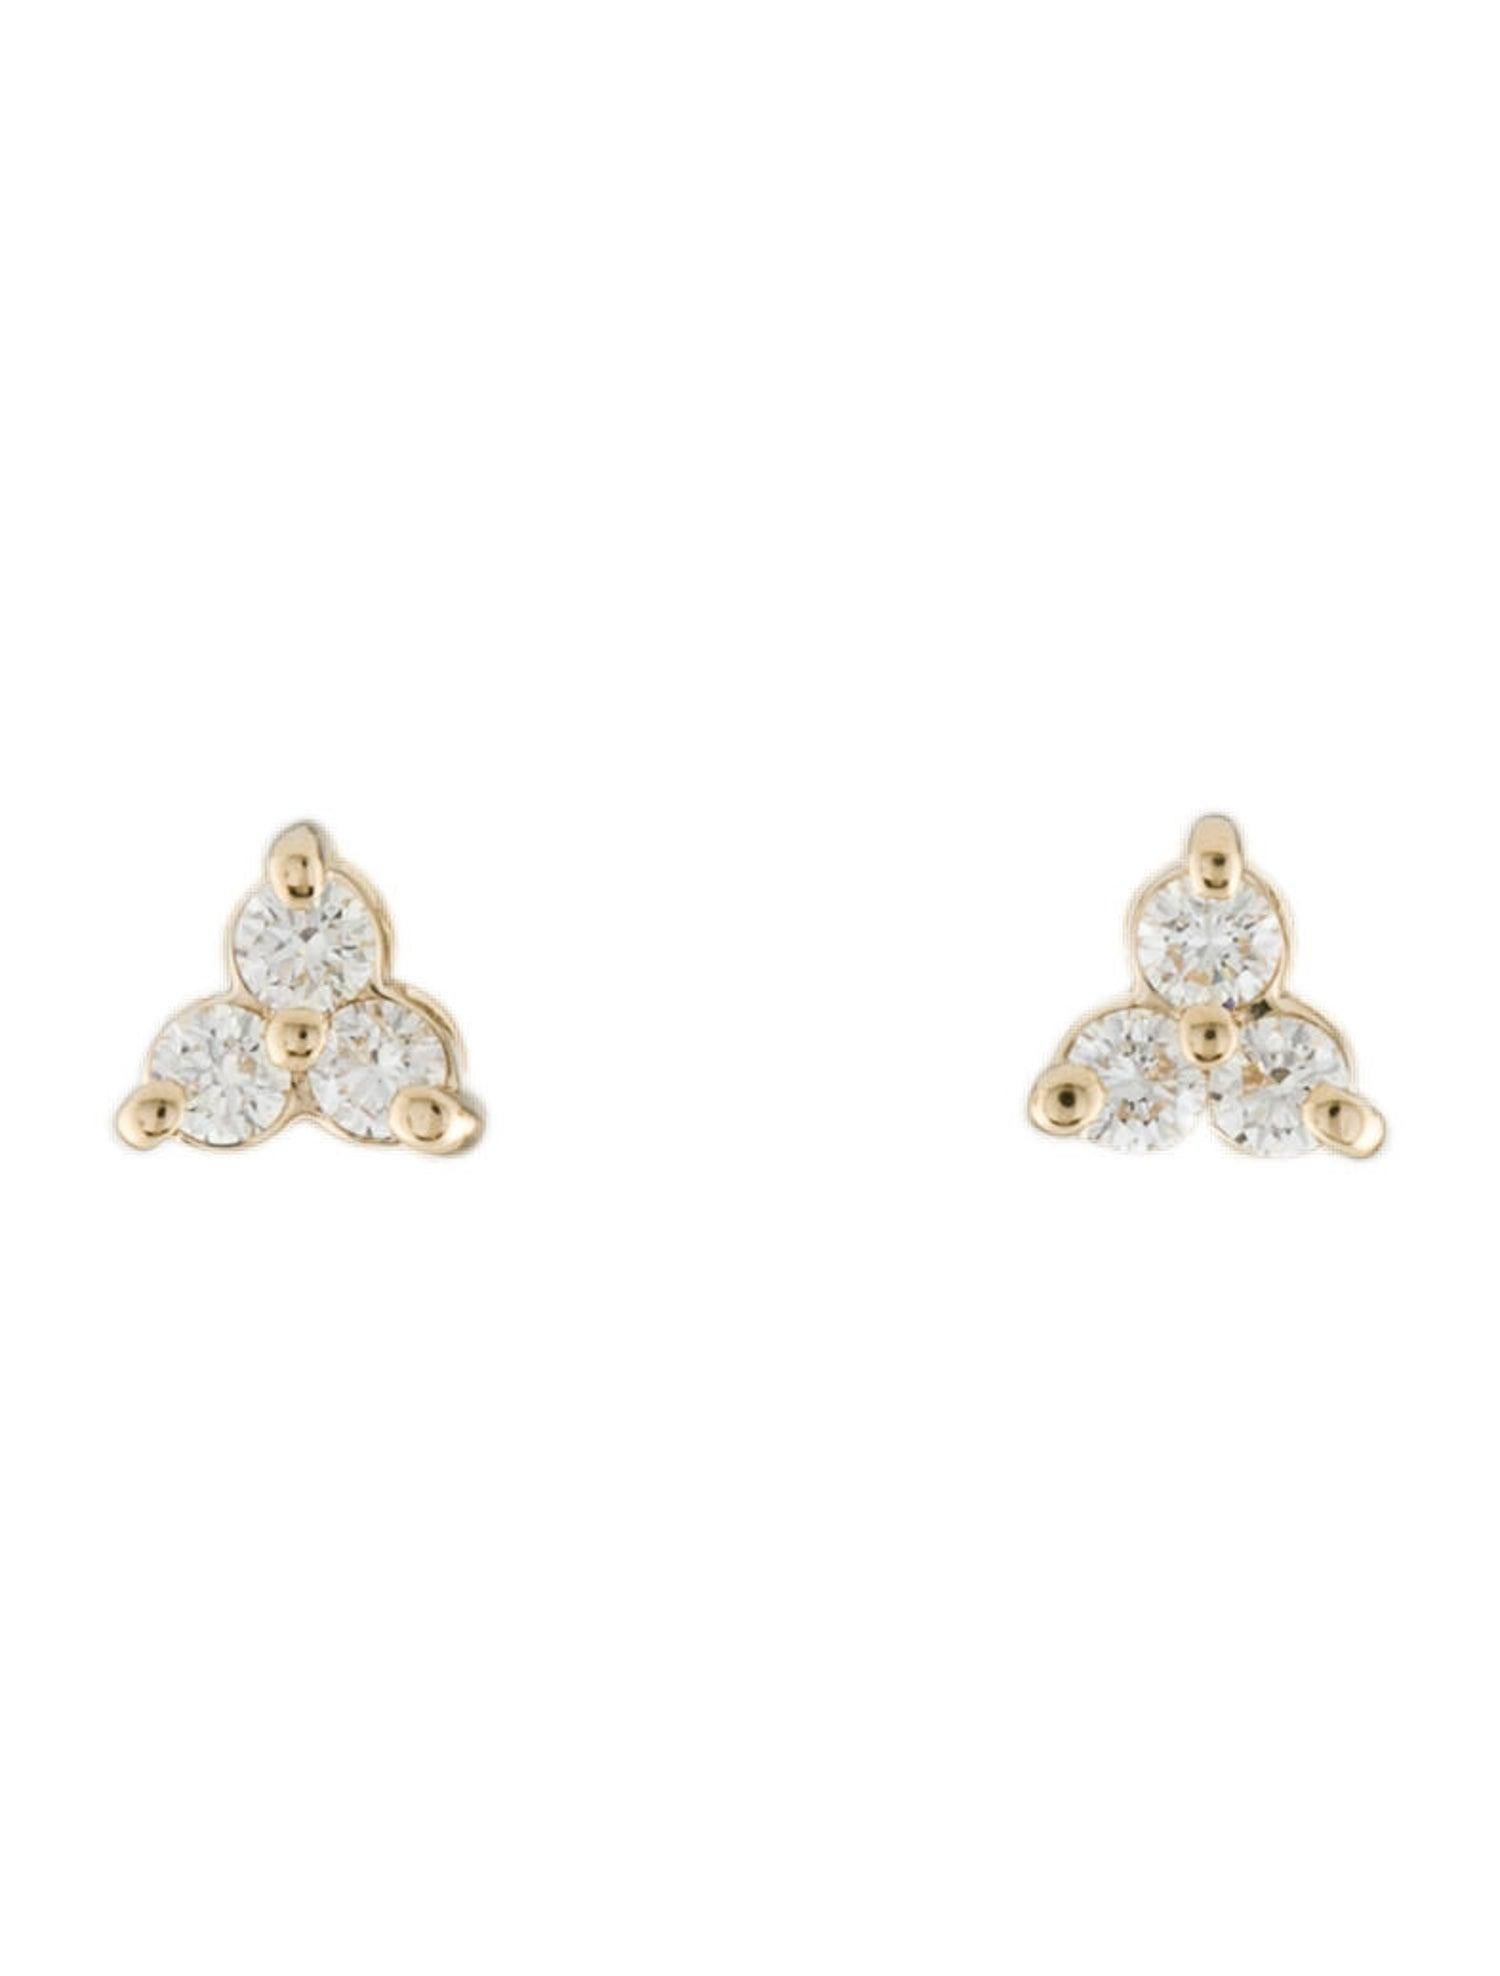 14K Yellow Gold 0.24 Carat Diamond 3 Stone Earrings For Sale 1